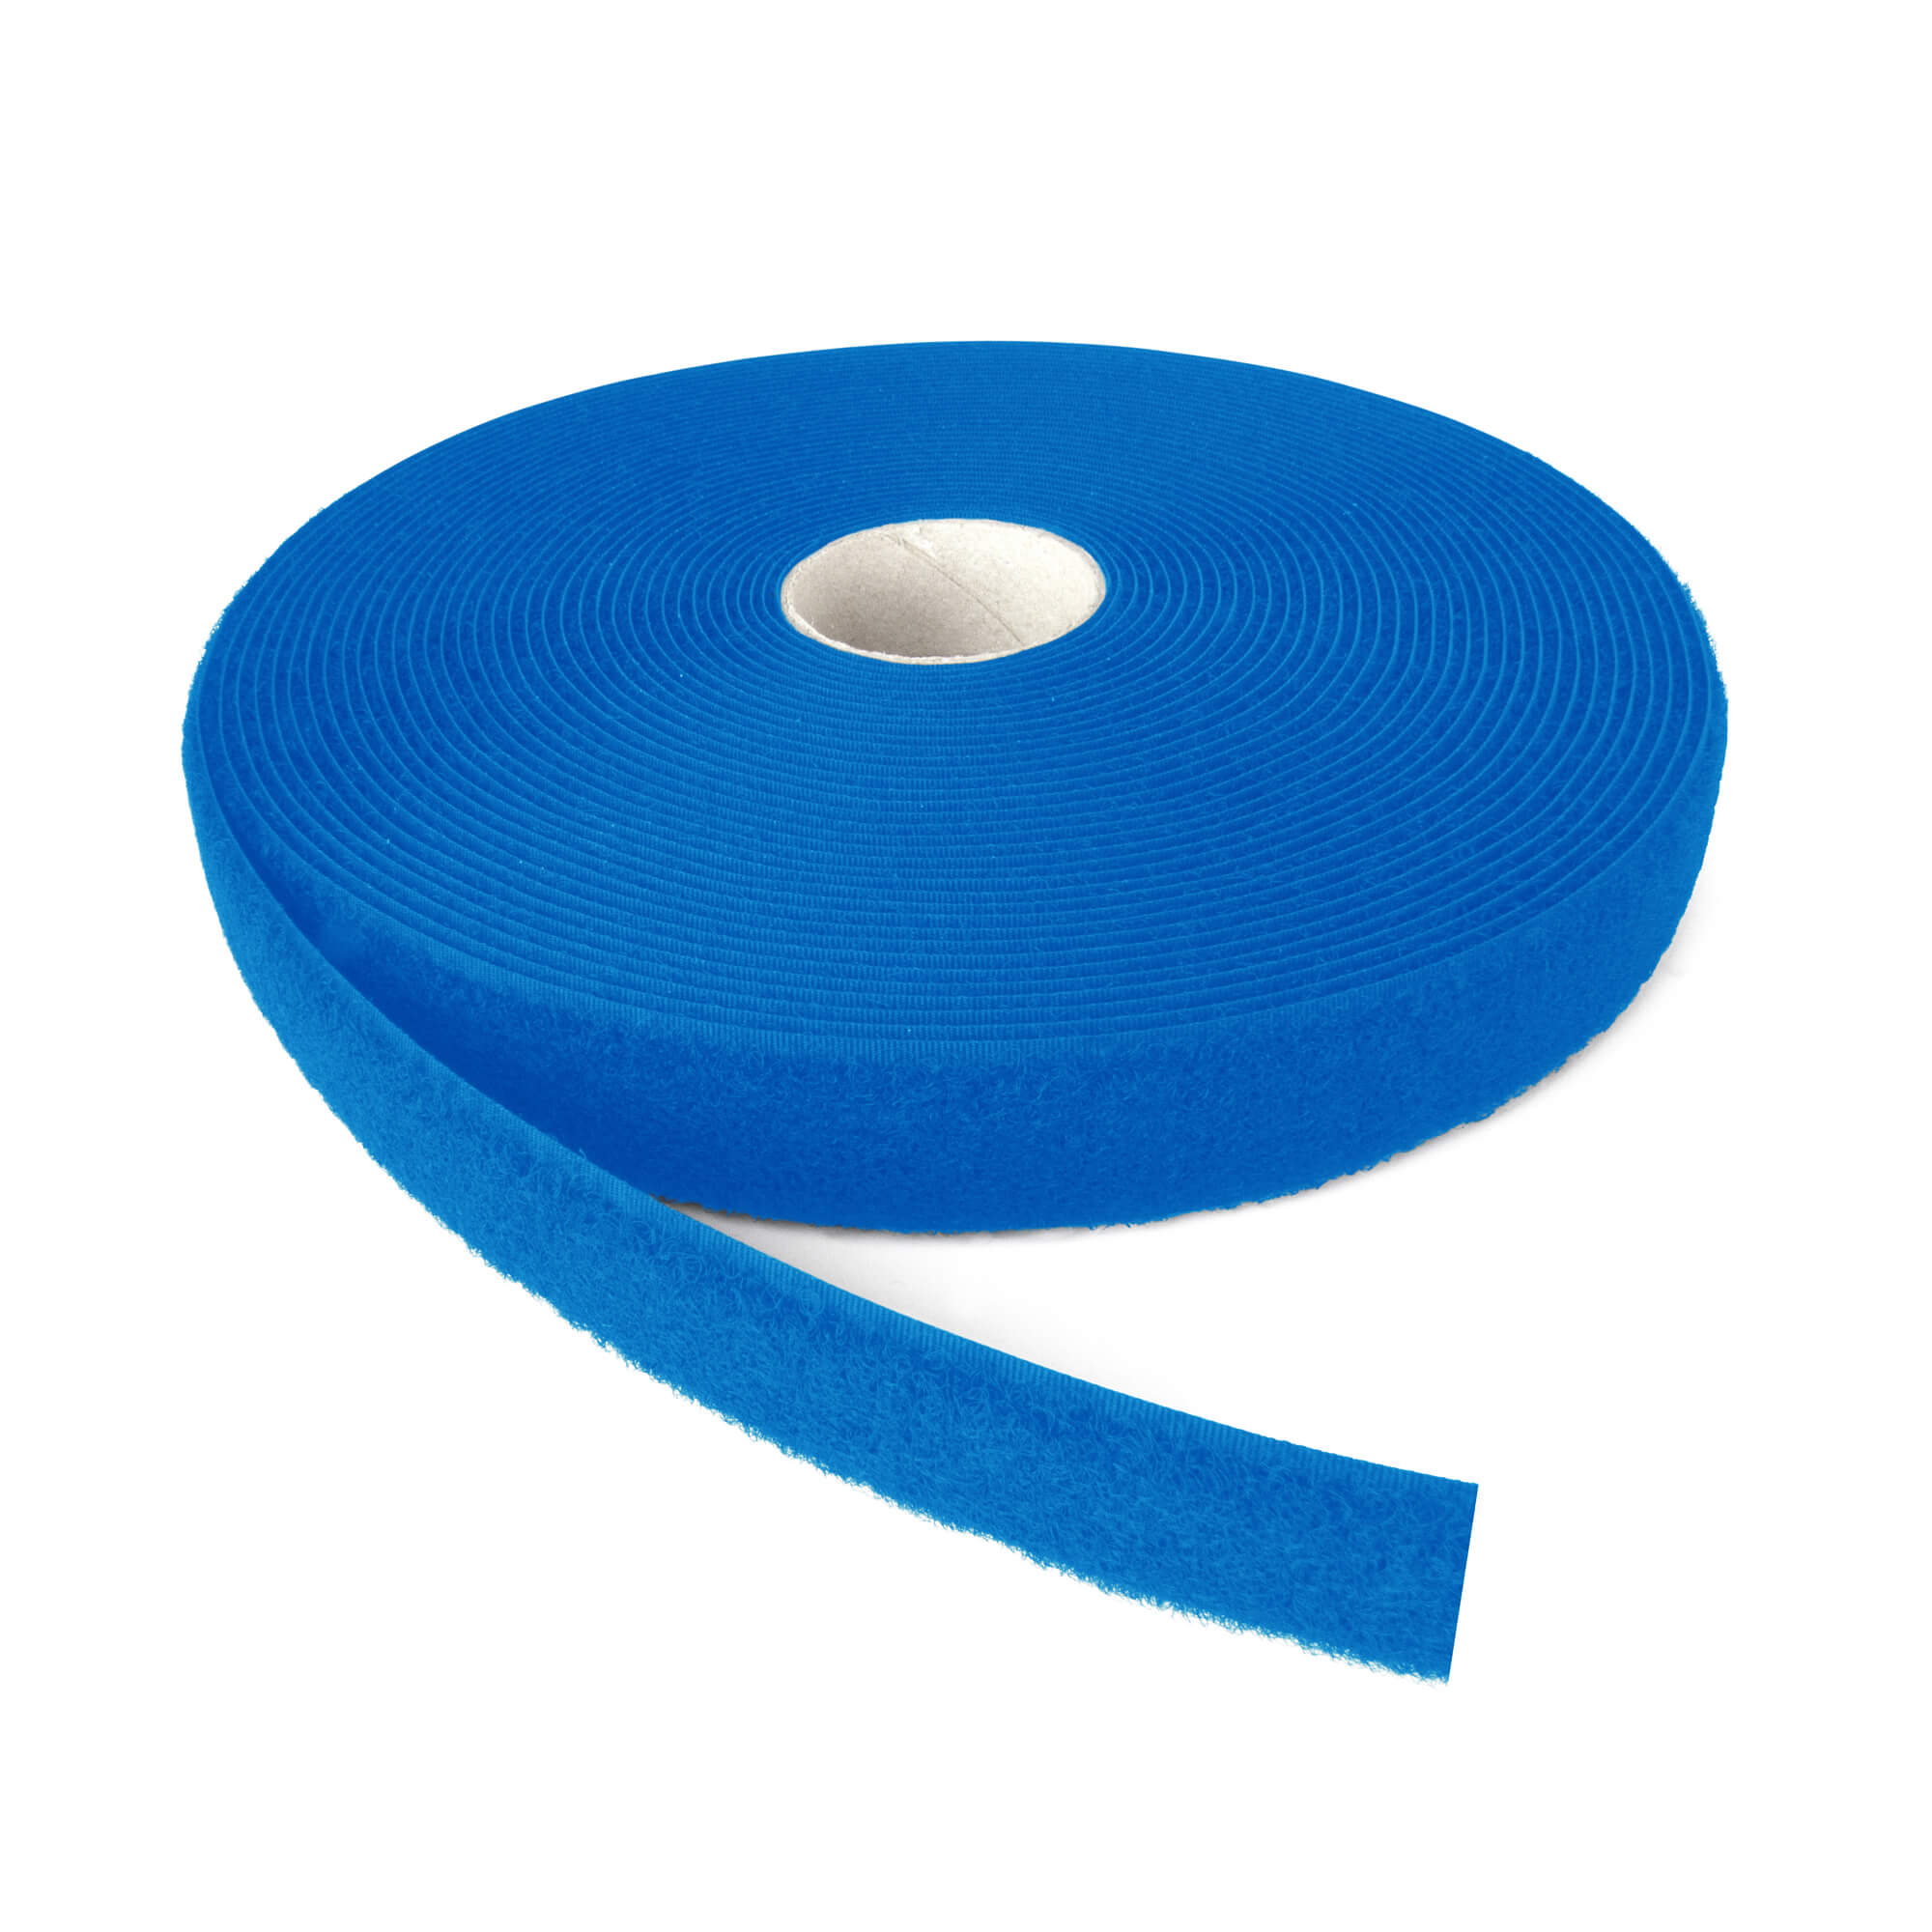 VELCRO® Brand ALFATEX® 25mm Royal Blue Sew On LOOP Tape 25m